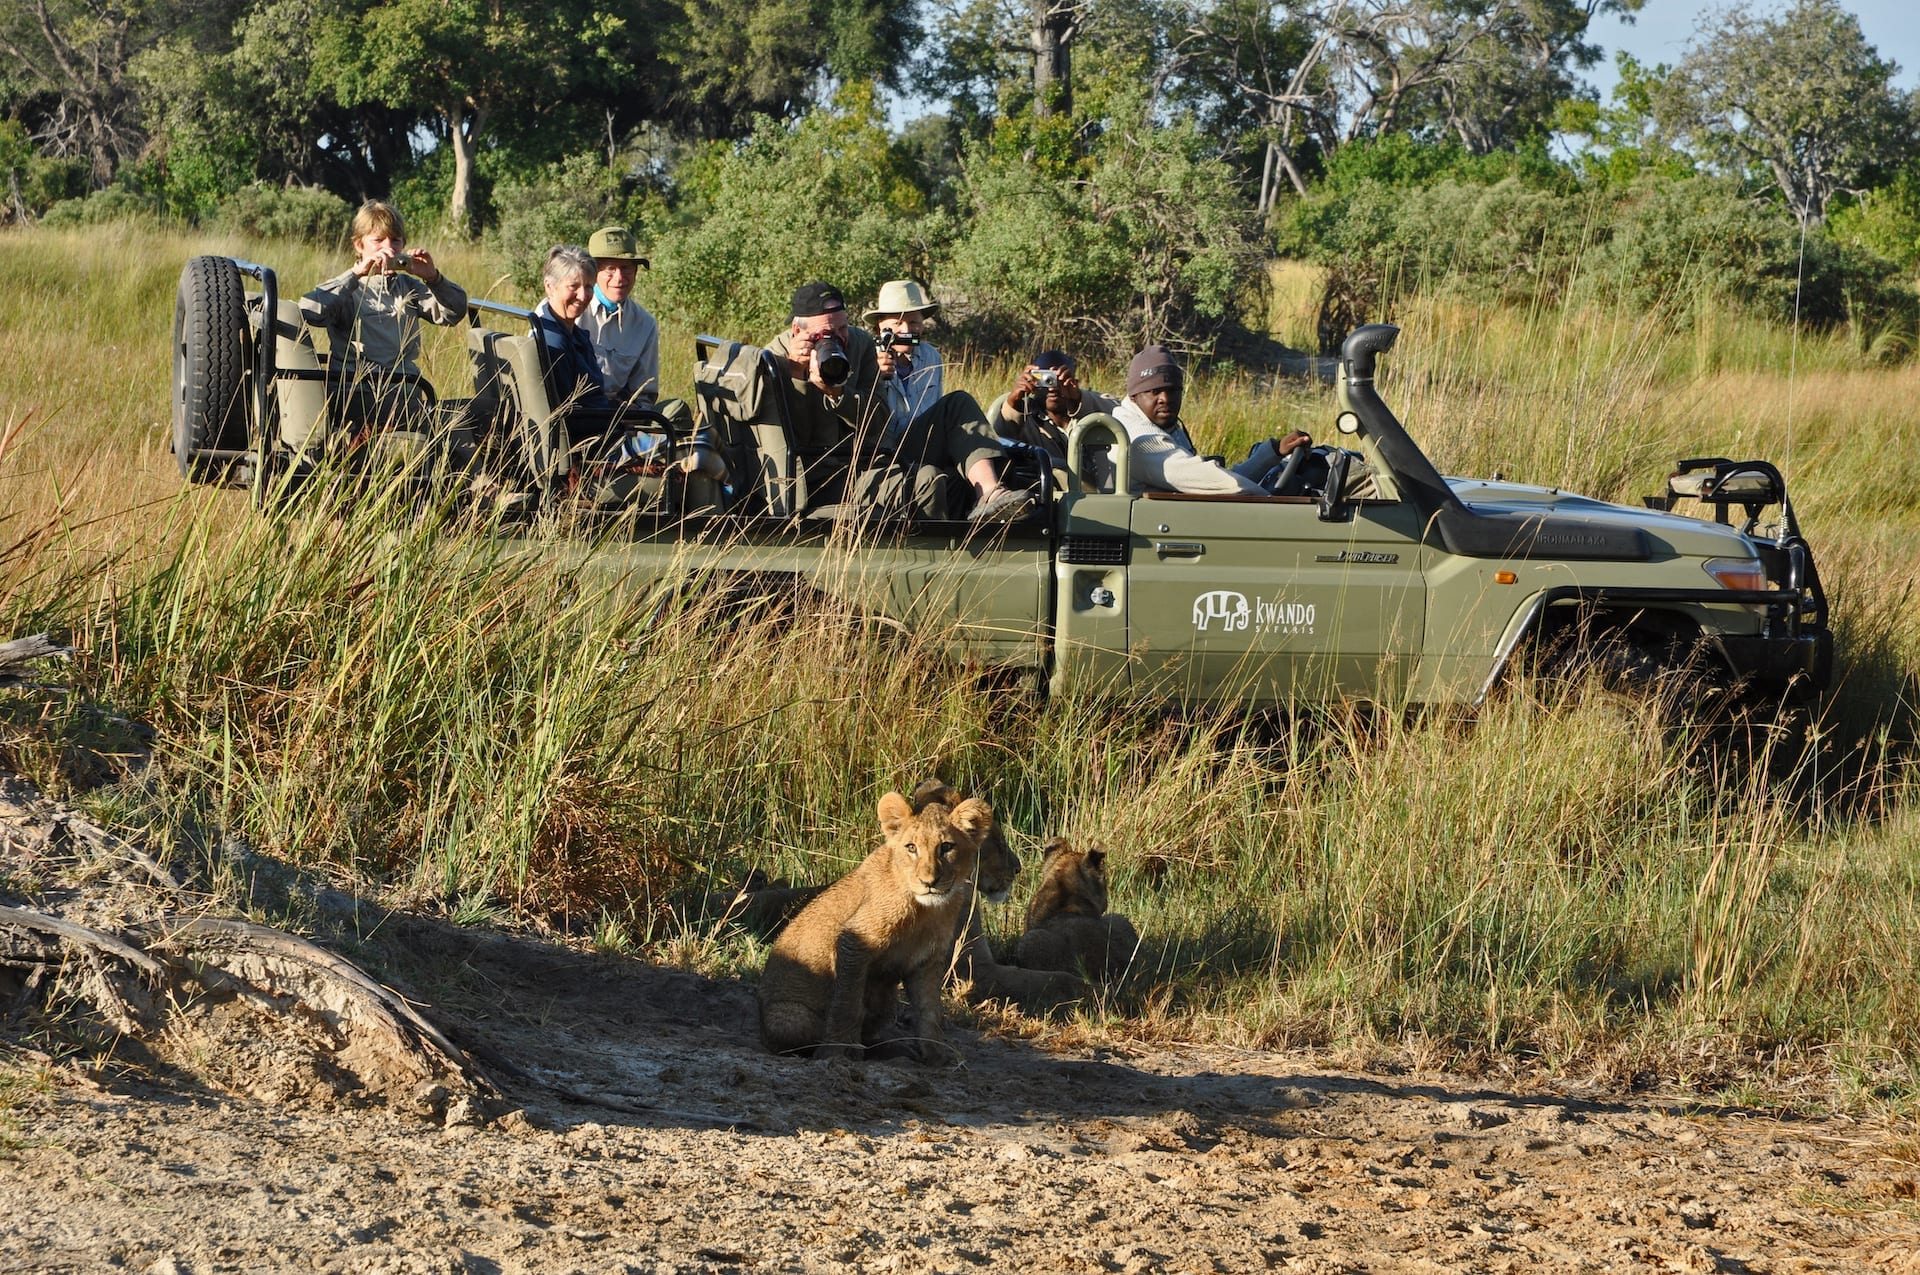 ALGEMEEN 8 - BW - Kwando Safaris - Vehicle and cubs - BW 2